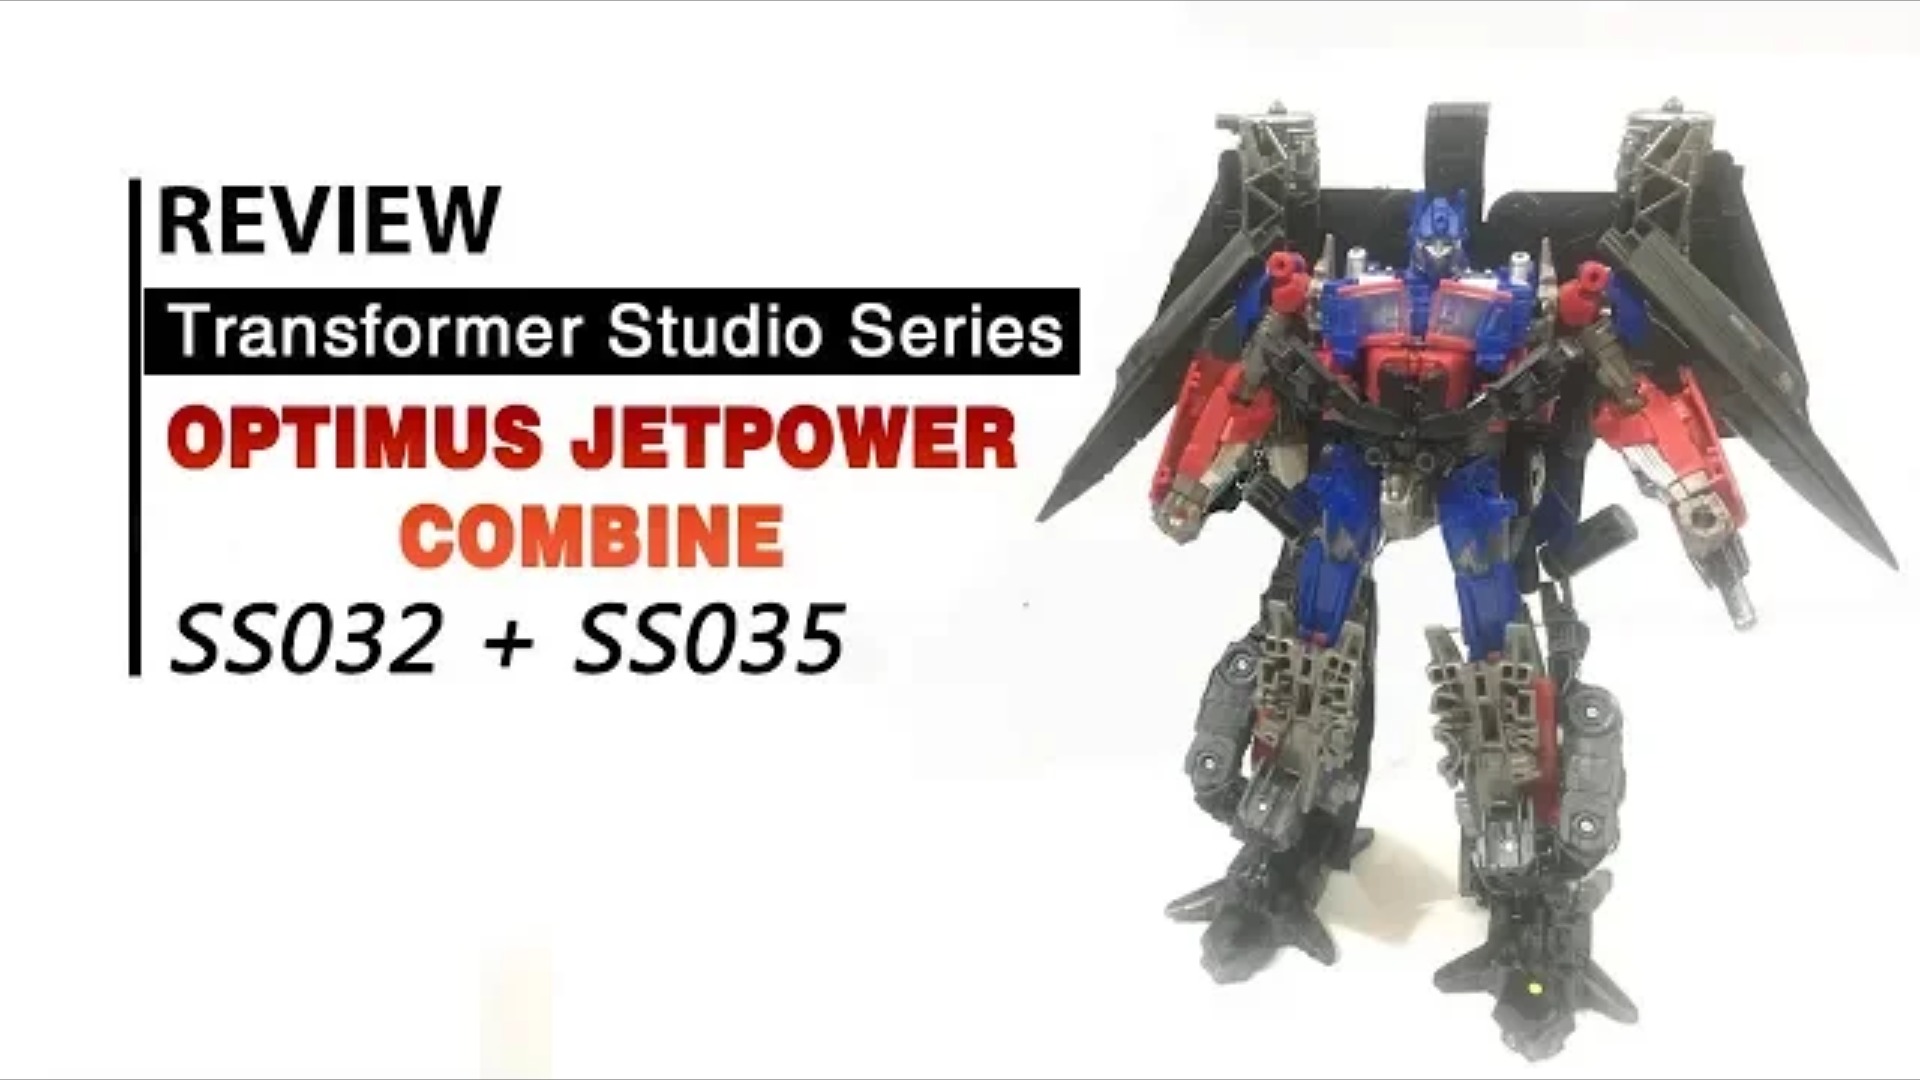 transformers optimus prime studio series